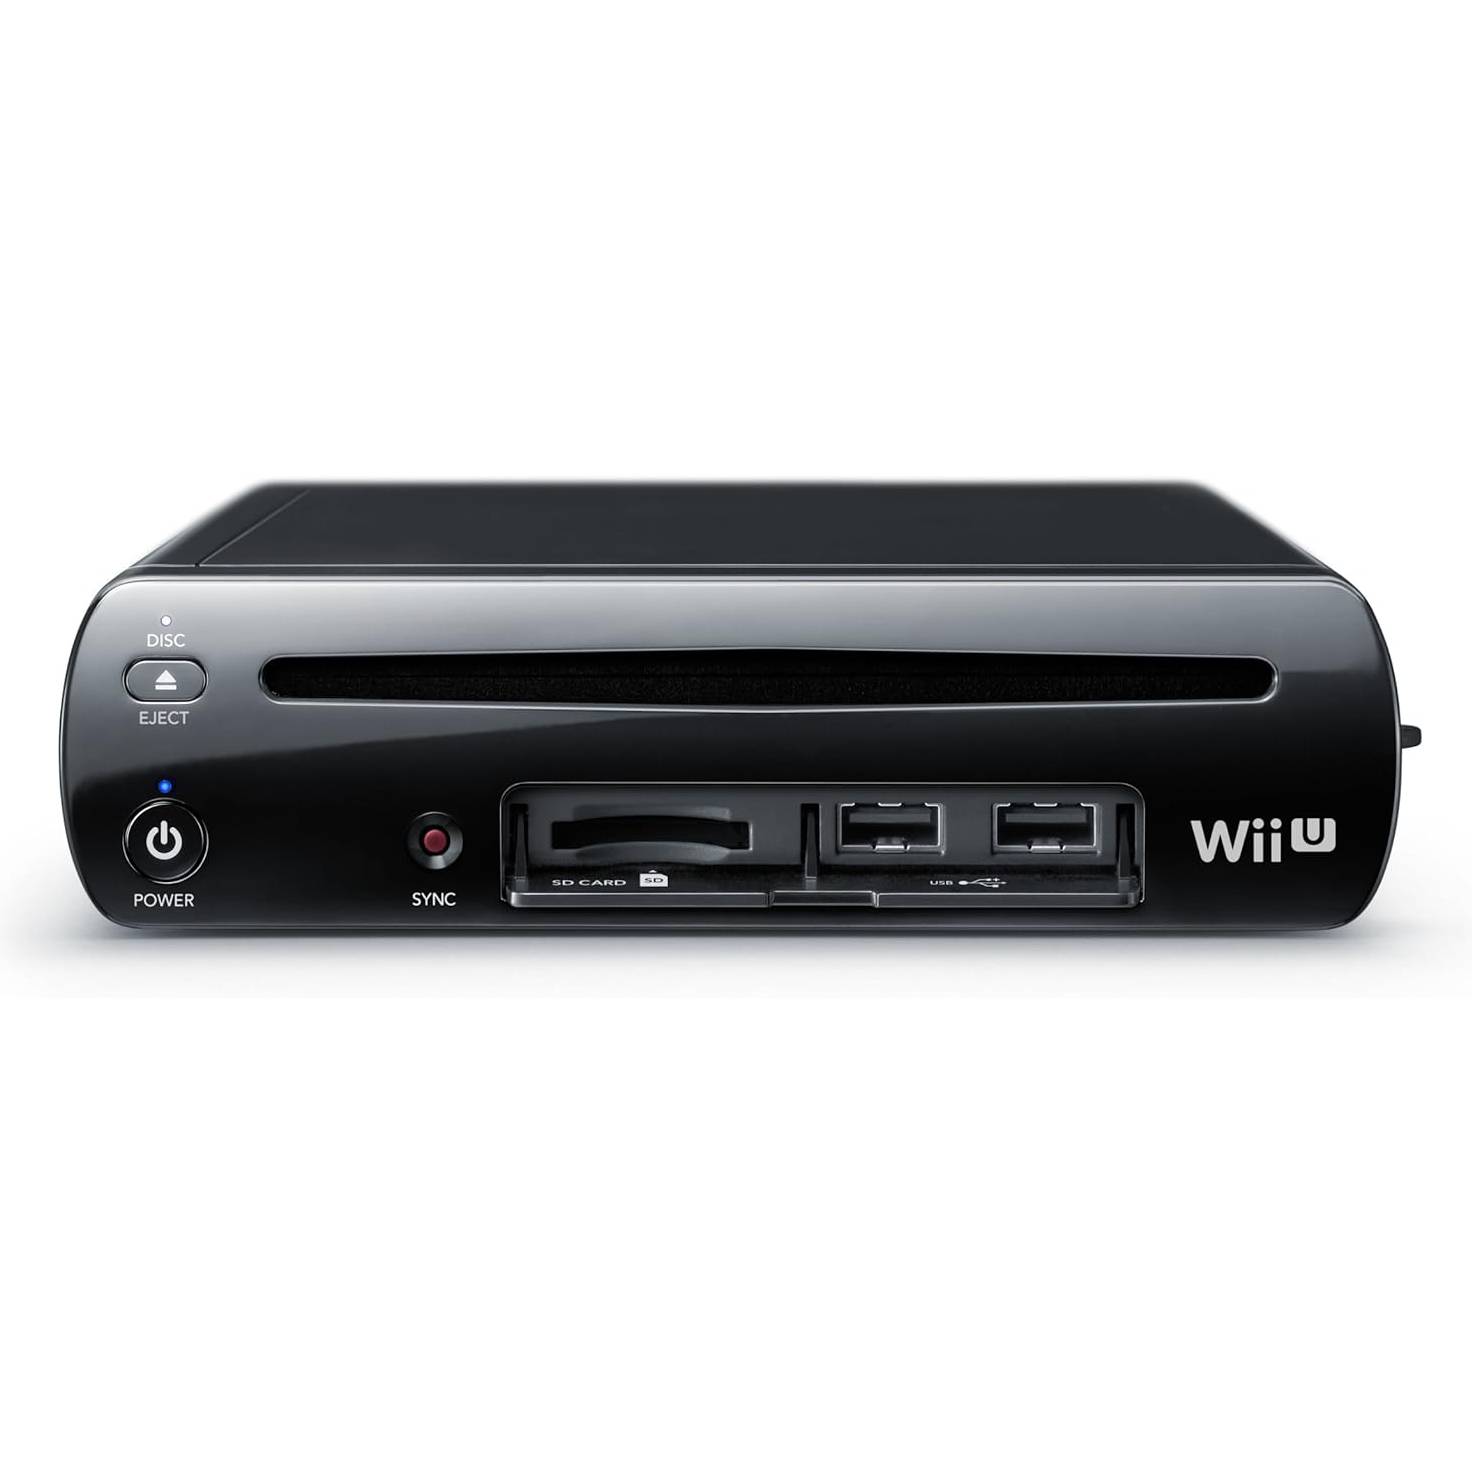 Nintendo Wii U 32GB Black front 2 (1)